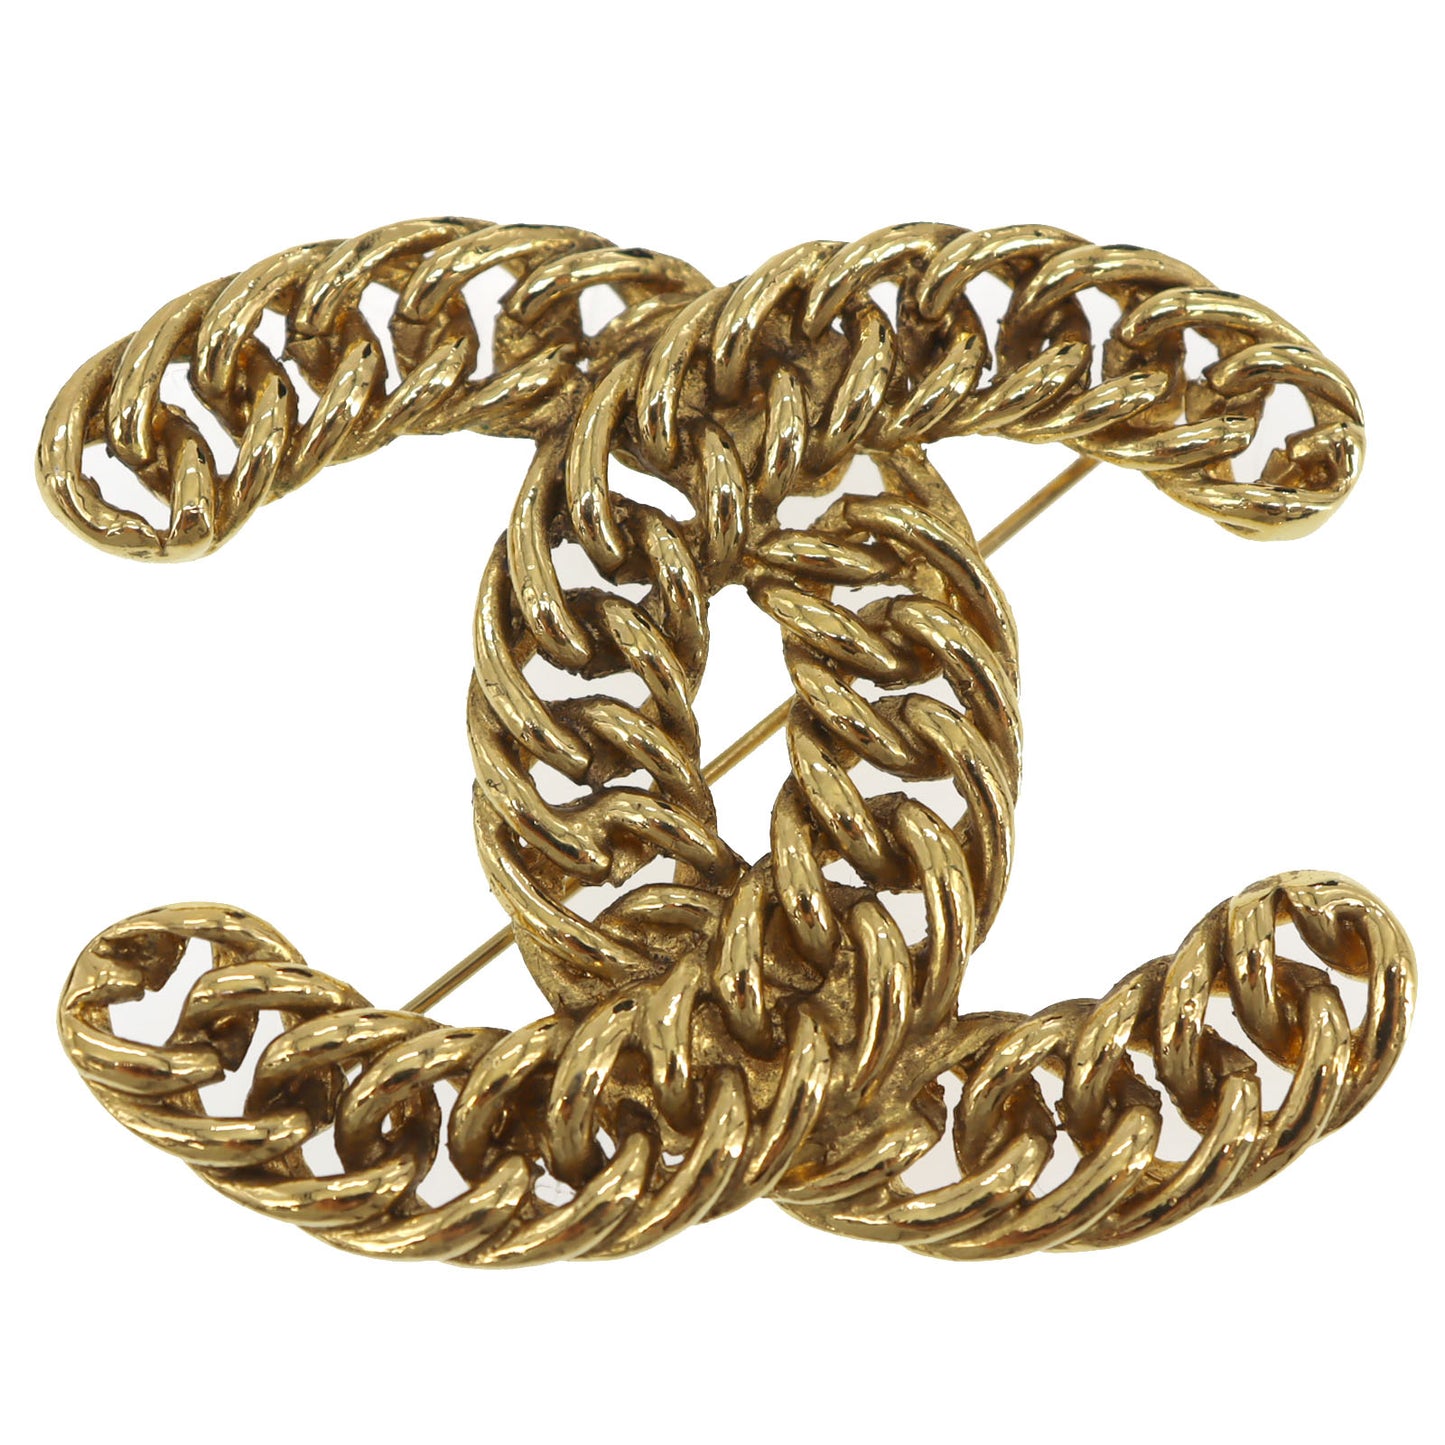 CHANEL CC Logos Chain Big Pin Brooch Gold #CO645